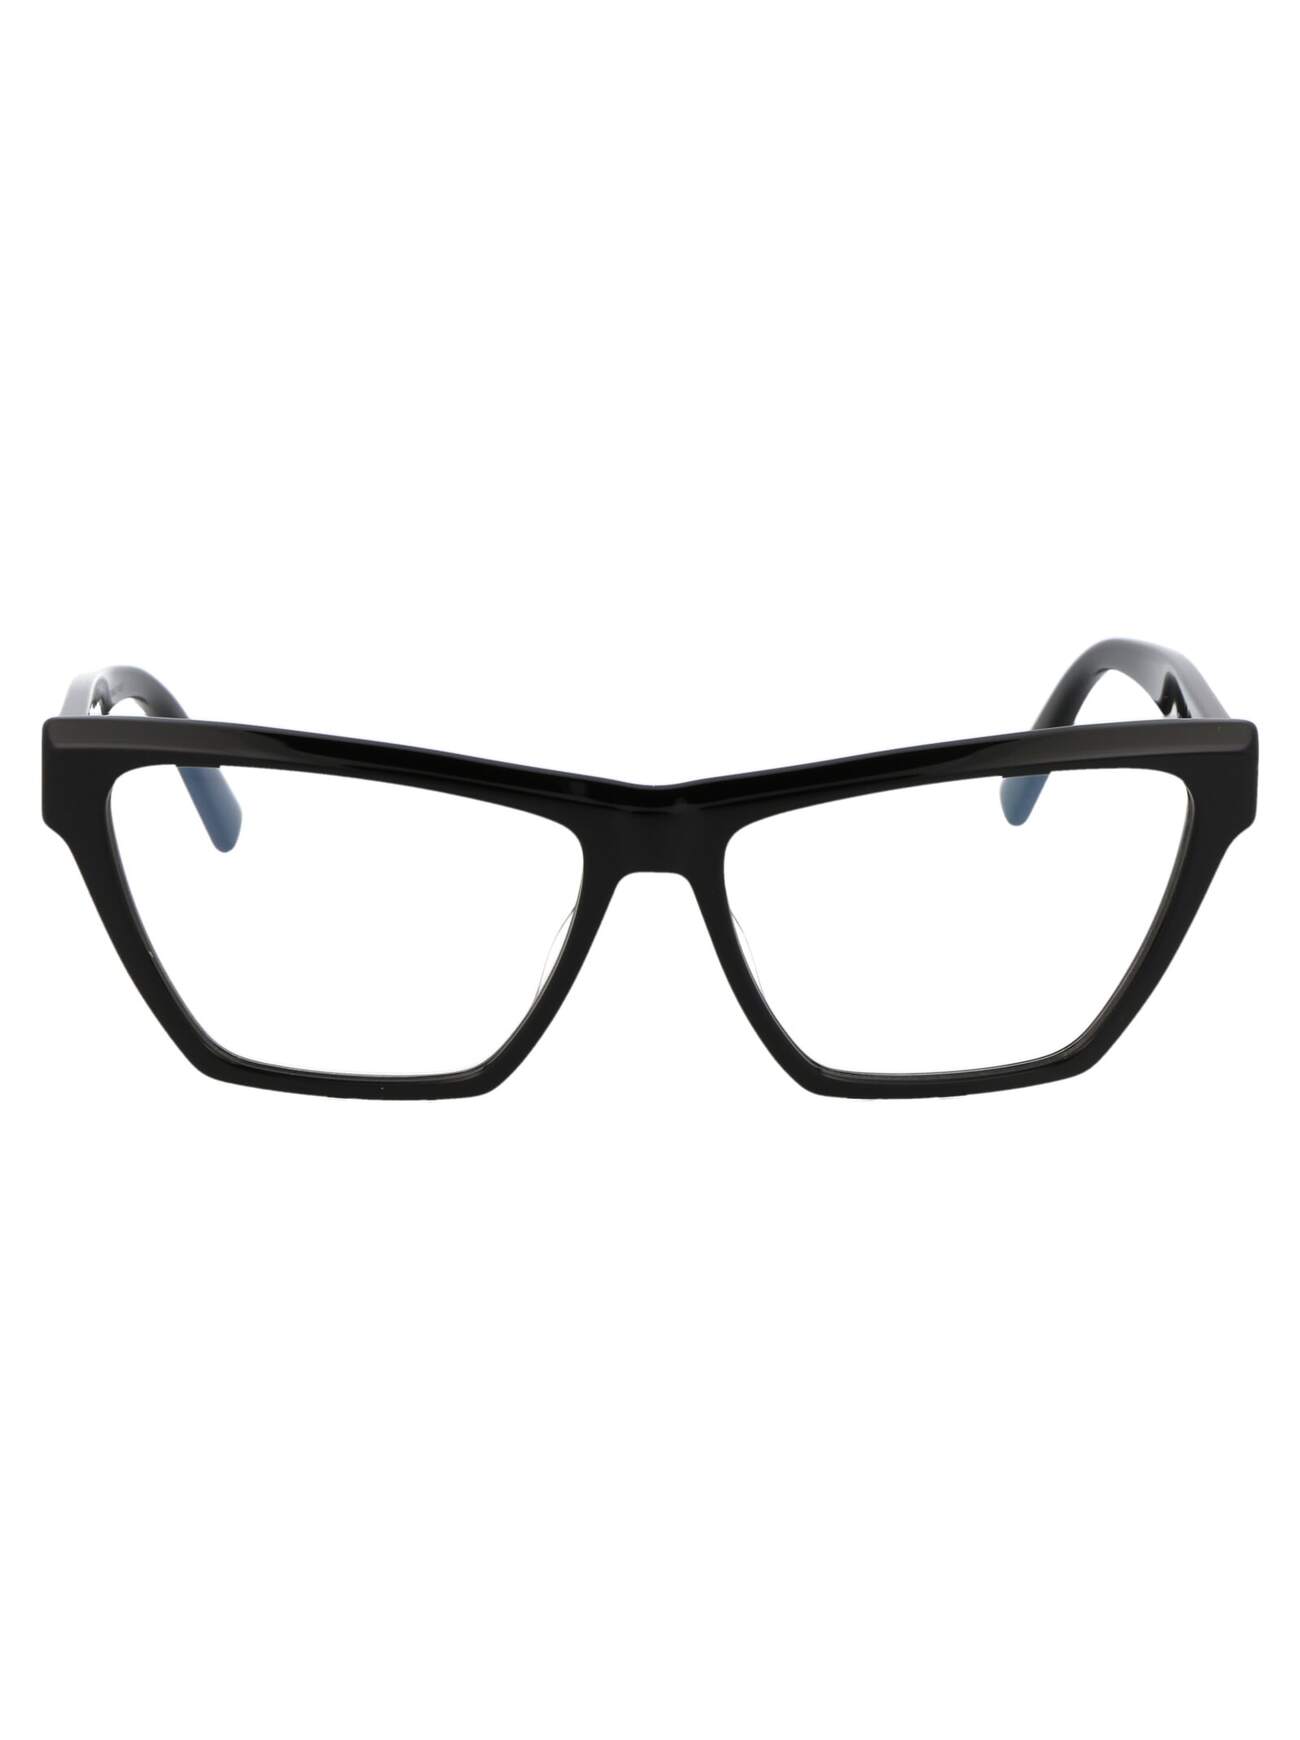 Saint Laurent Eyewear Sl M103 Sunglasses in black / transparent